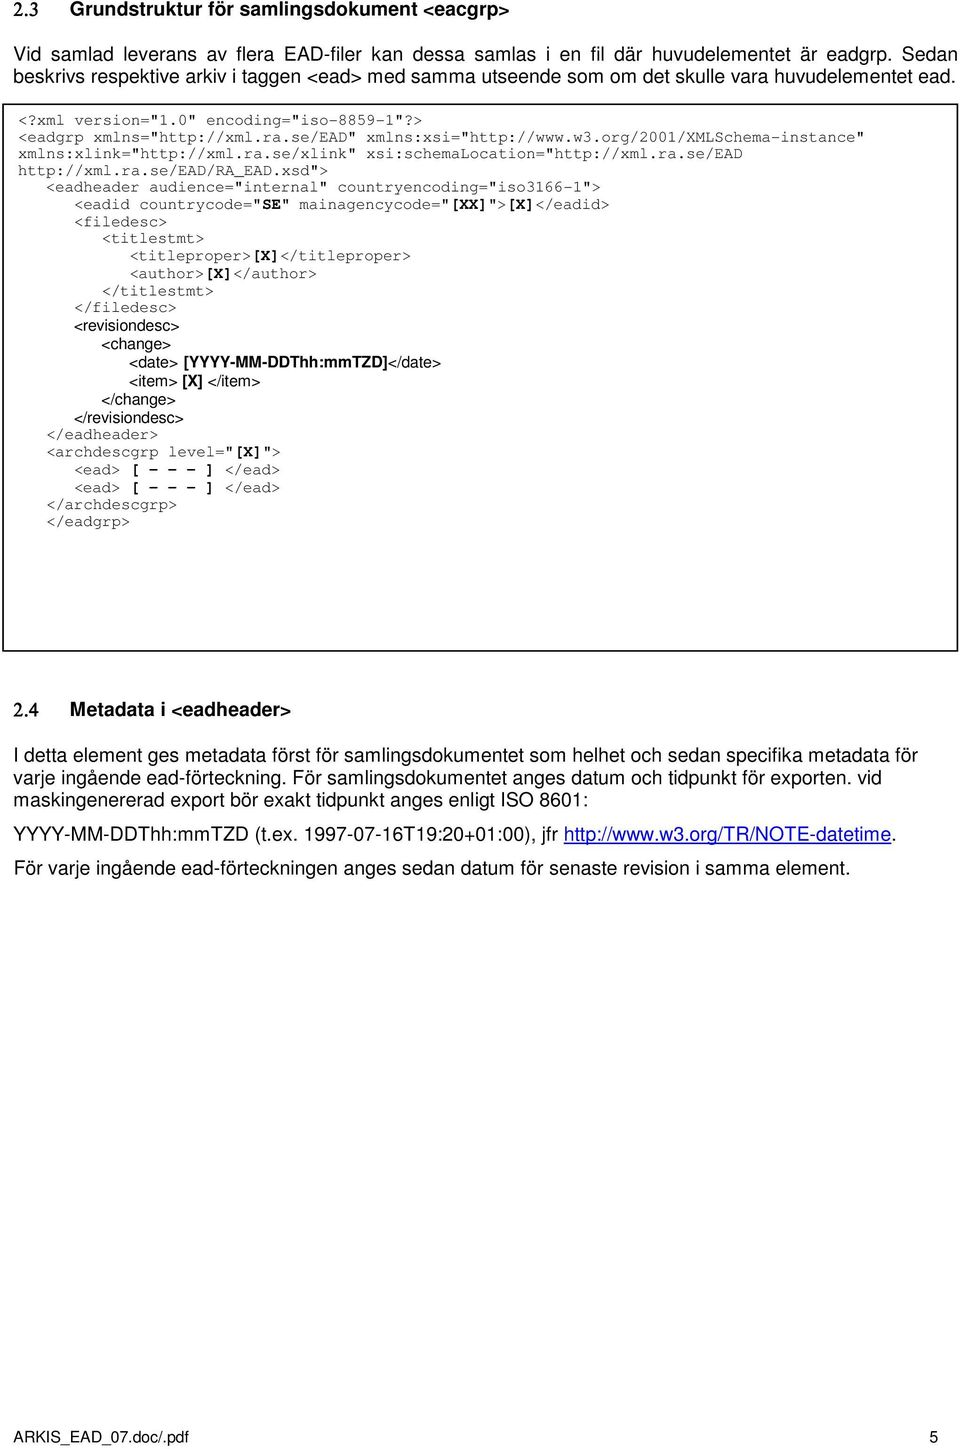 w3.org/2001/xmlschema-instance" xmlns:xlink="http://xml.ra.se/xlink" xsi:schemalocation="http://xml.ra.se/ead http://xml.ra.se/ead/ra_ead.